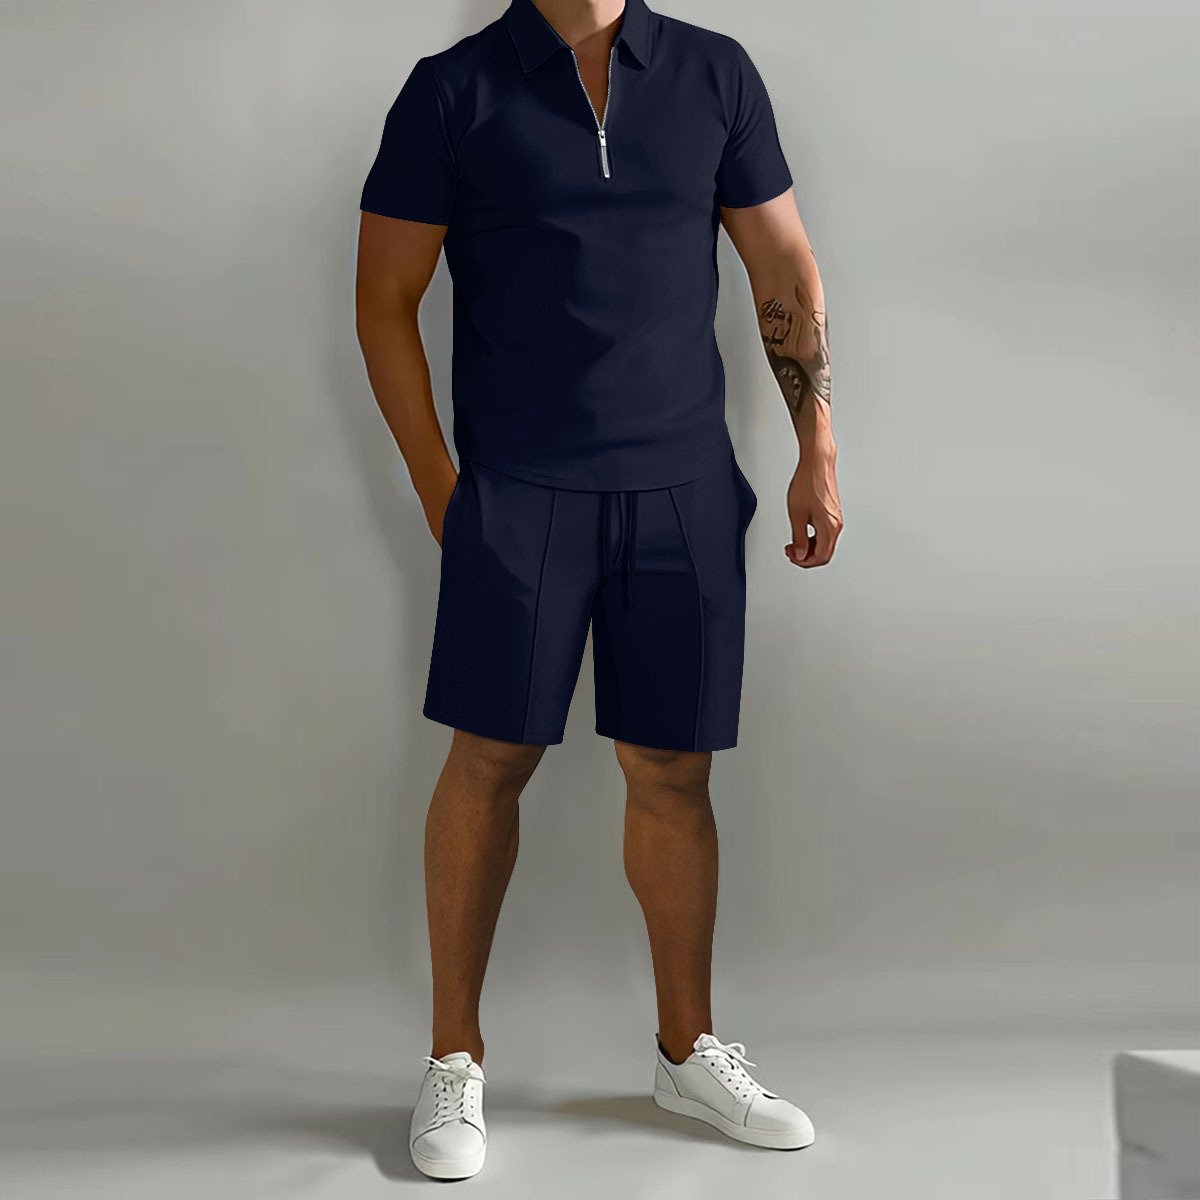 🔥NEW UPGRADE🔥Men's Casual Polo Shirt and Shorts Set